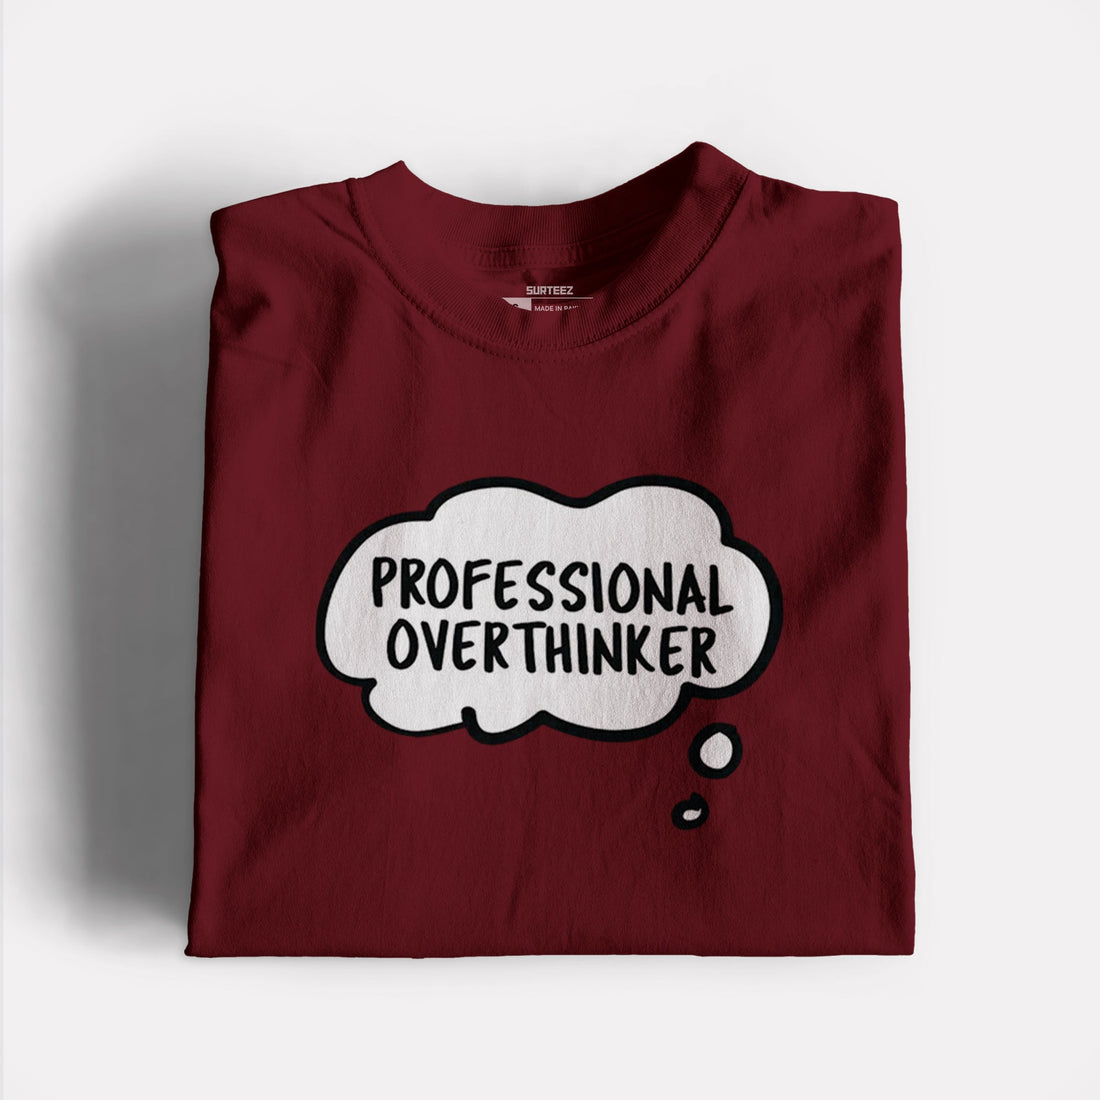 Overthinker Graphic Tshirt